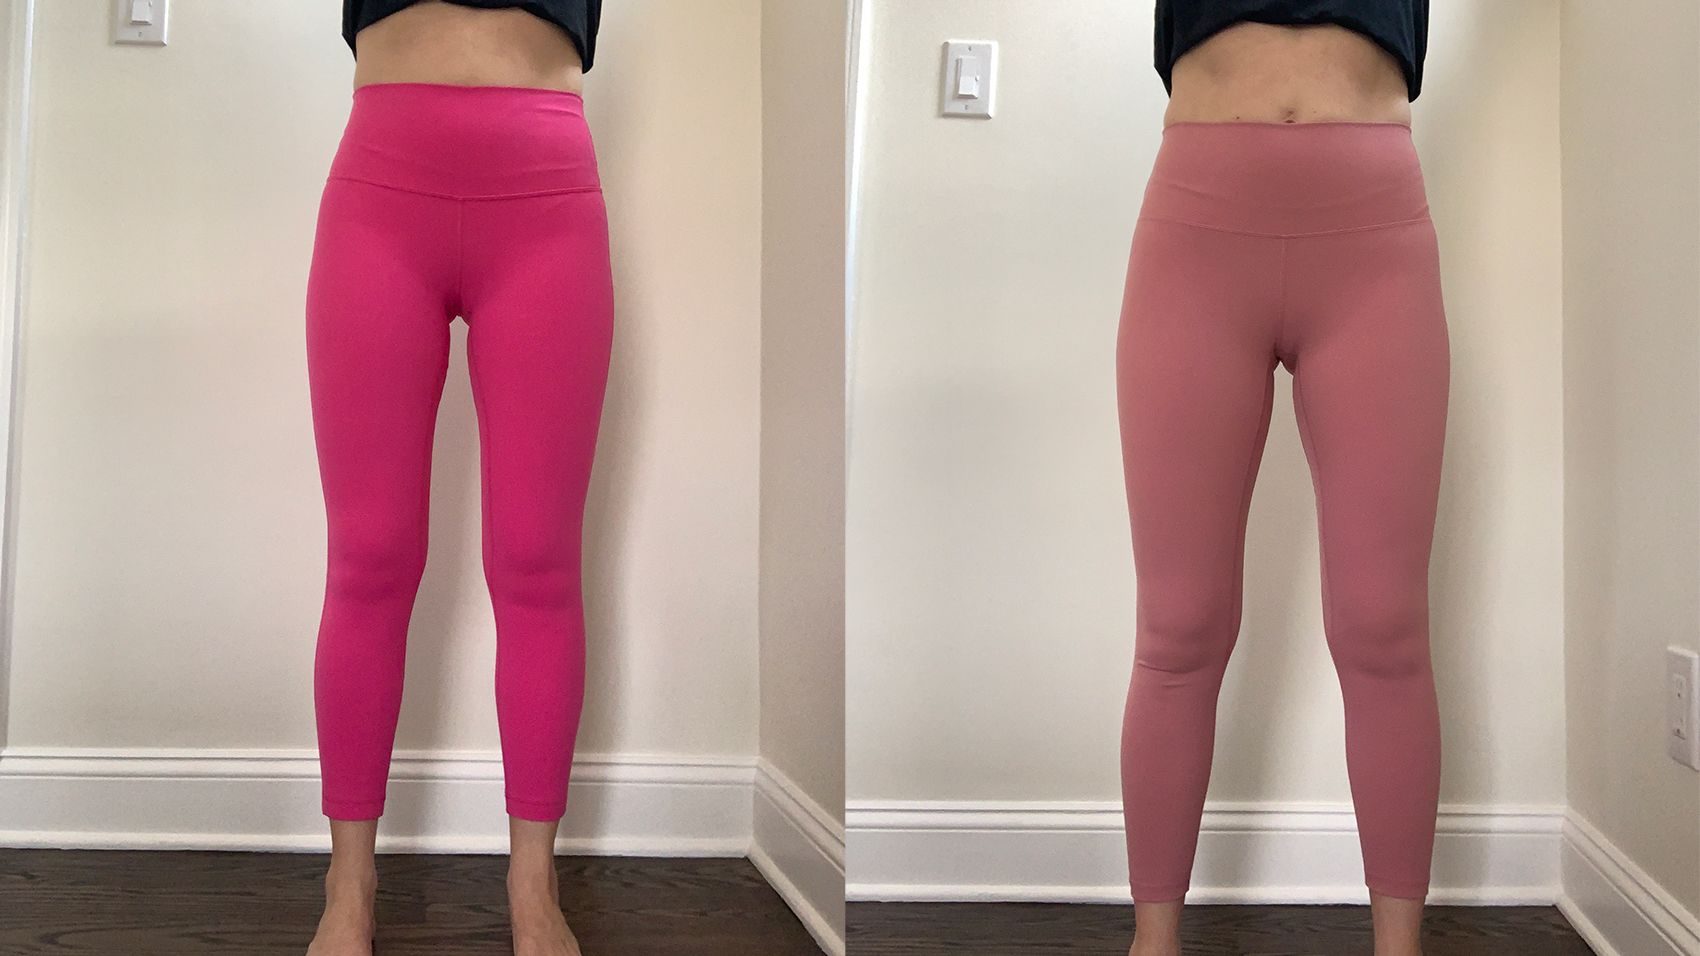 Lululemon Align Pink Camo Legging Pants 24” Inseam Women’s Size Small 